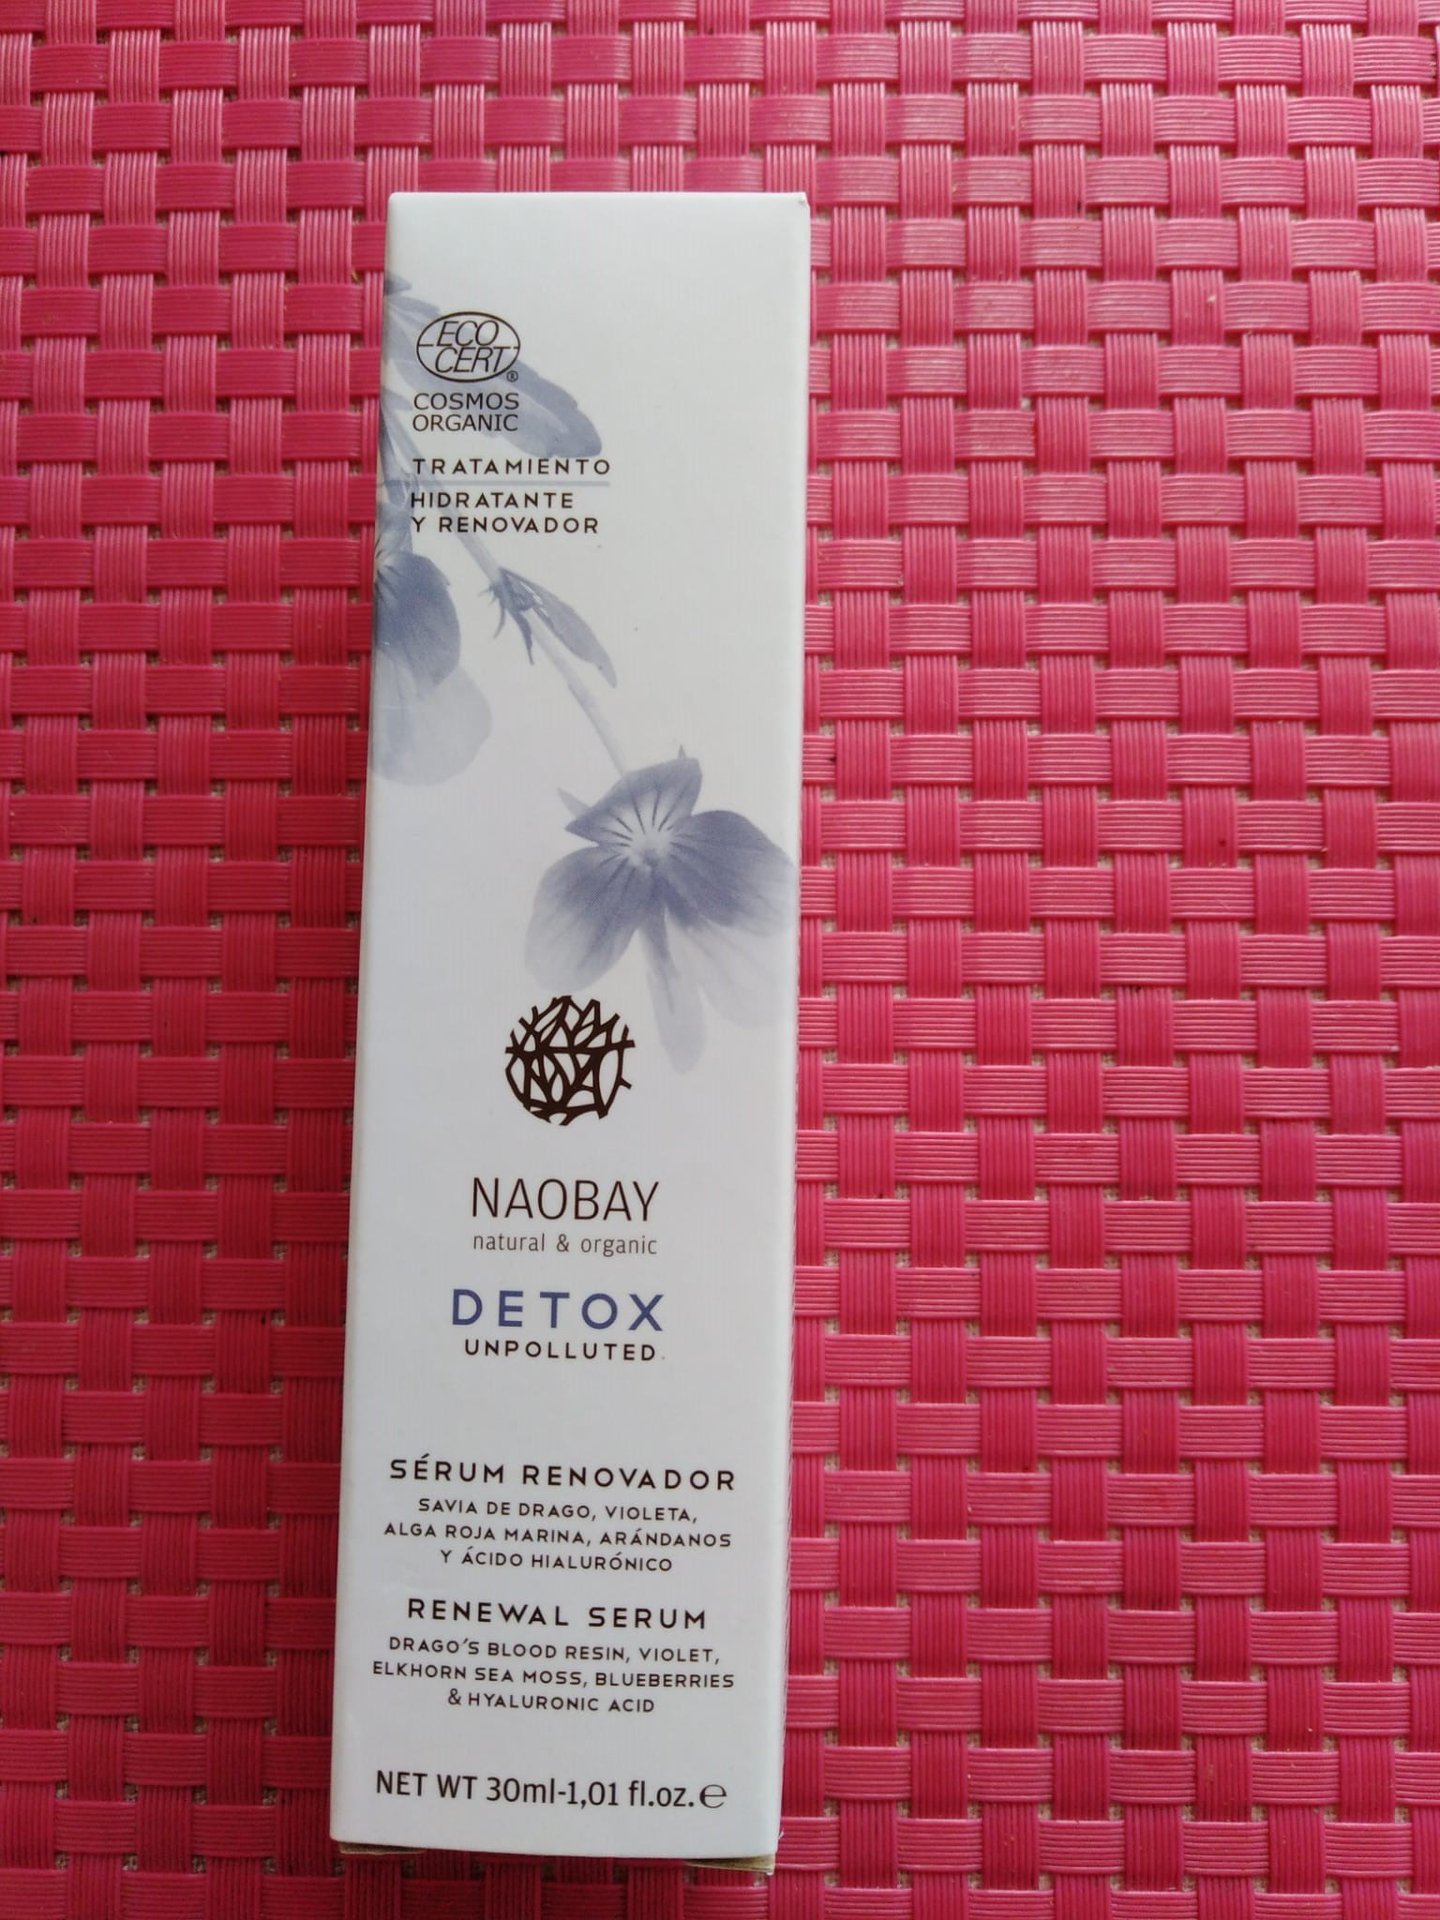 Naobay Serum Renovador Detox Review | abillion